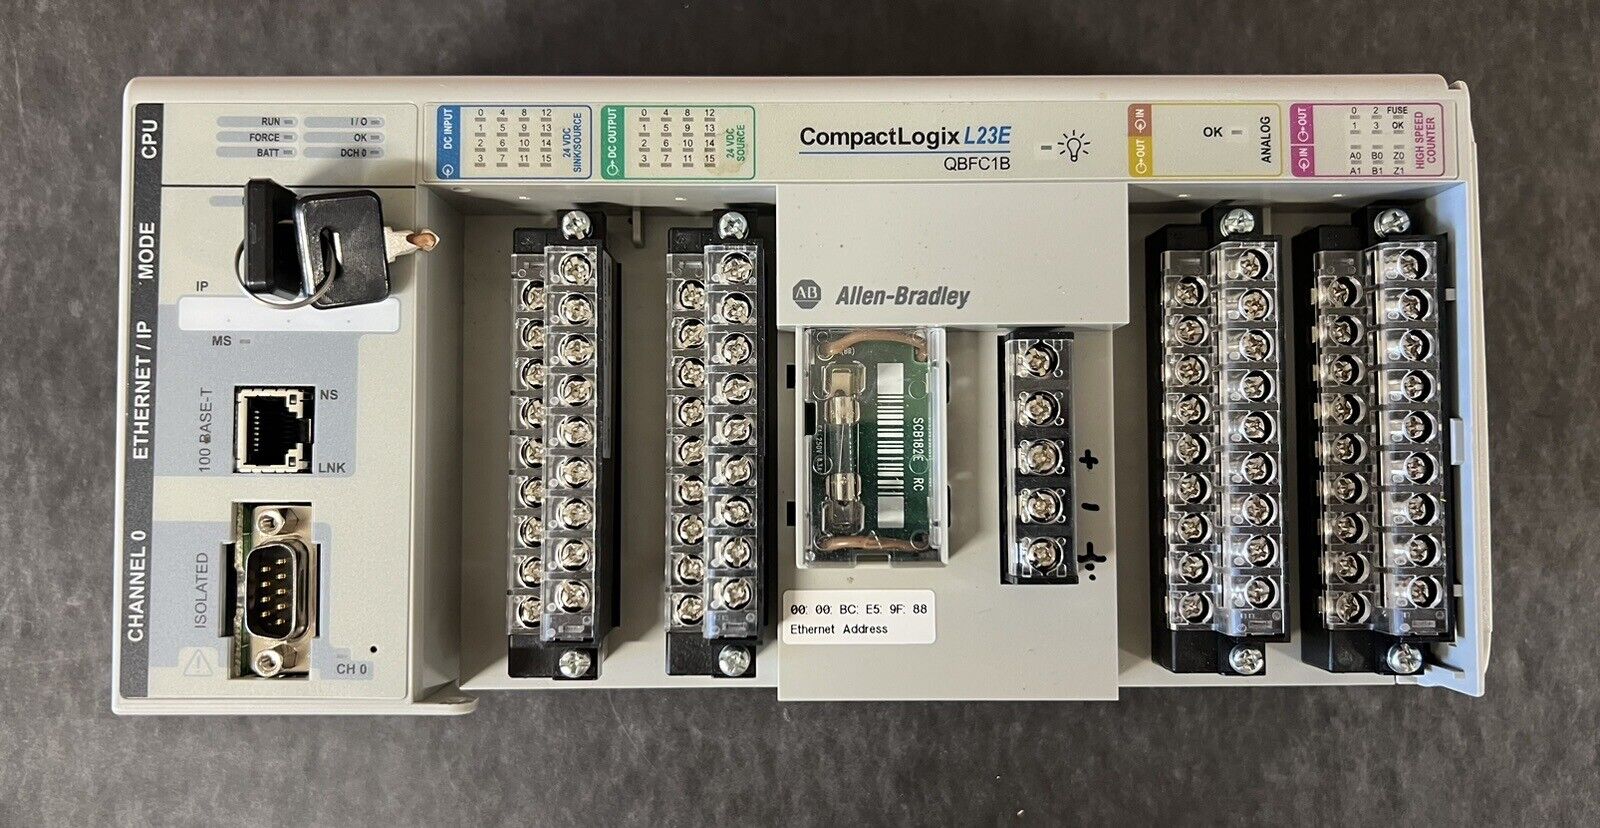 Allen-Bradley 1769-L23E-QBFC1B (1769-L23E-QBFC1B) Processor/Controller